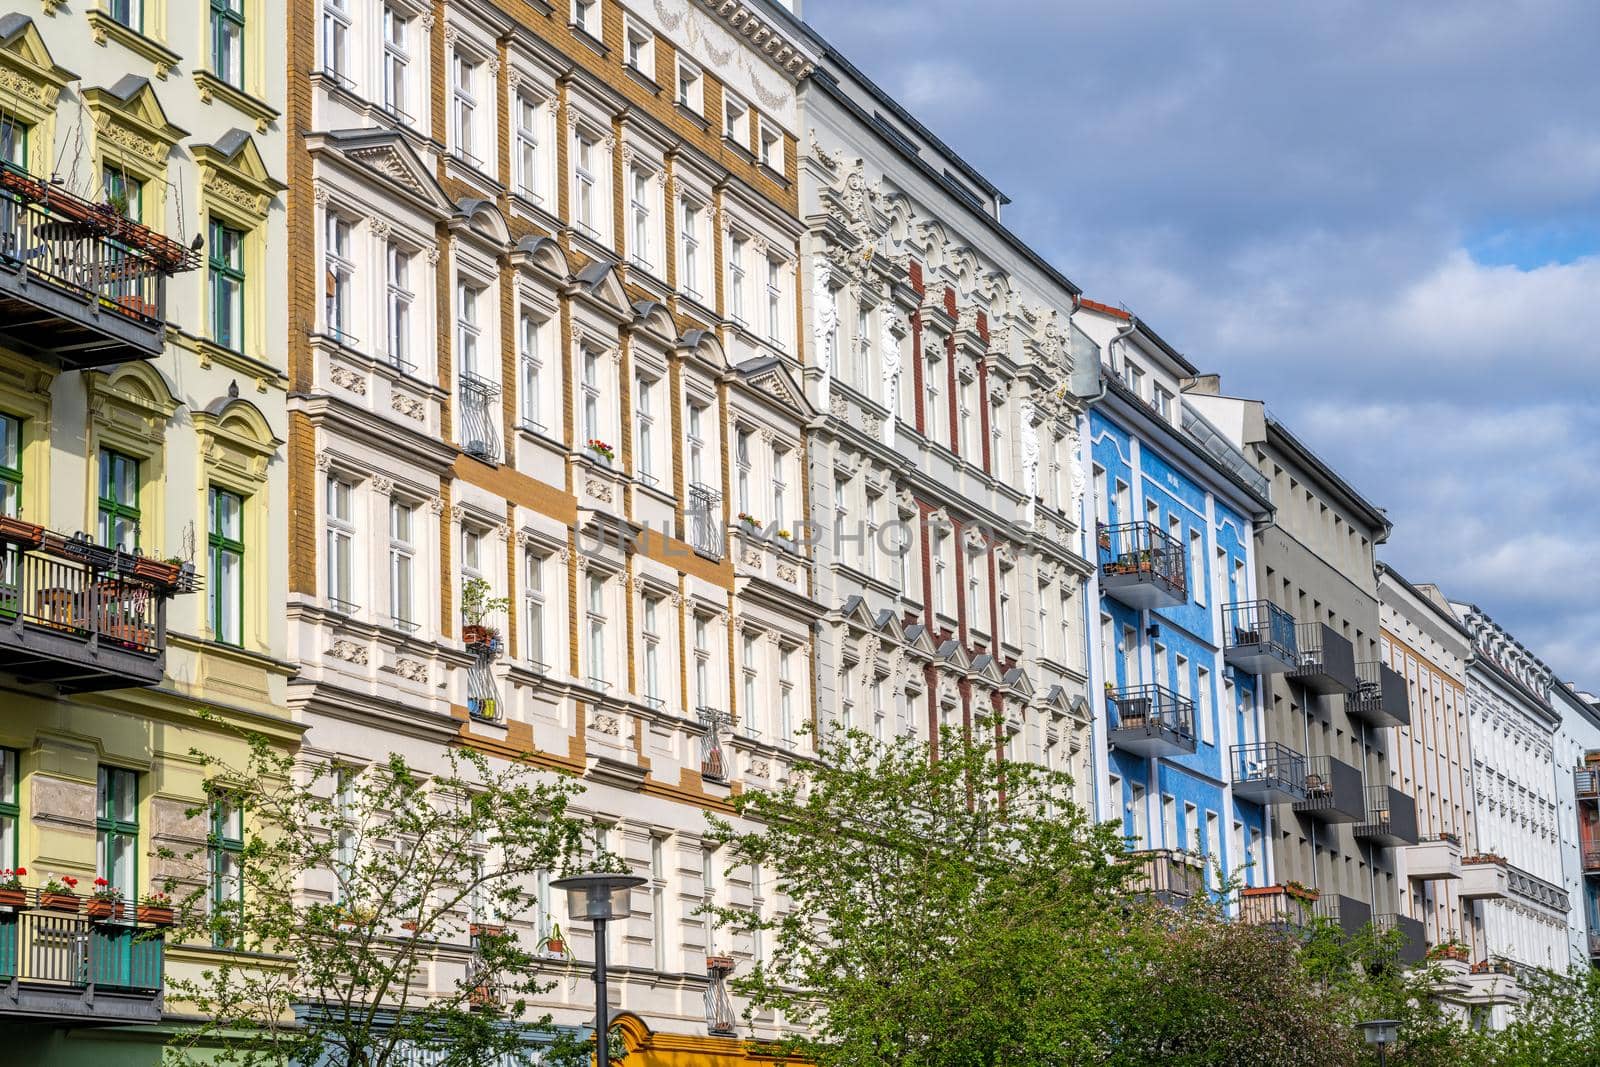 Beautiful renovated old apartment buildings seen in Prenzlauer Berg, Berlin